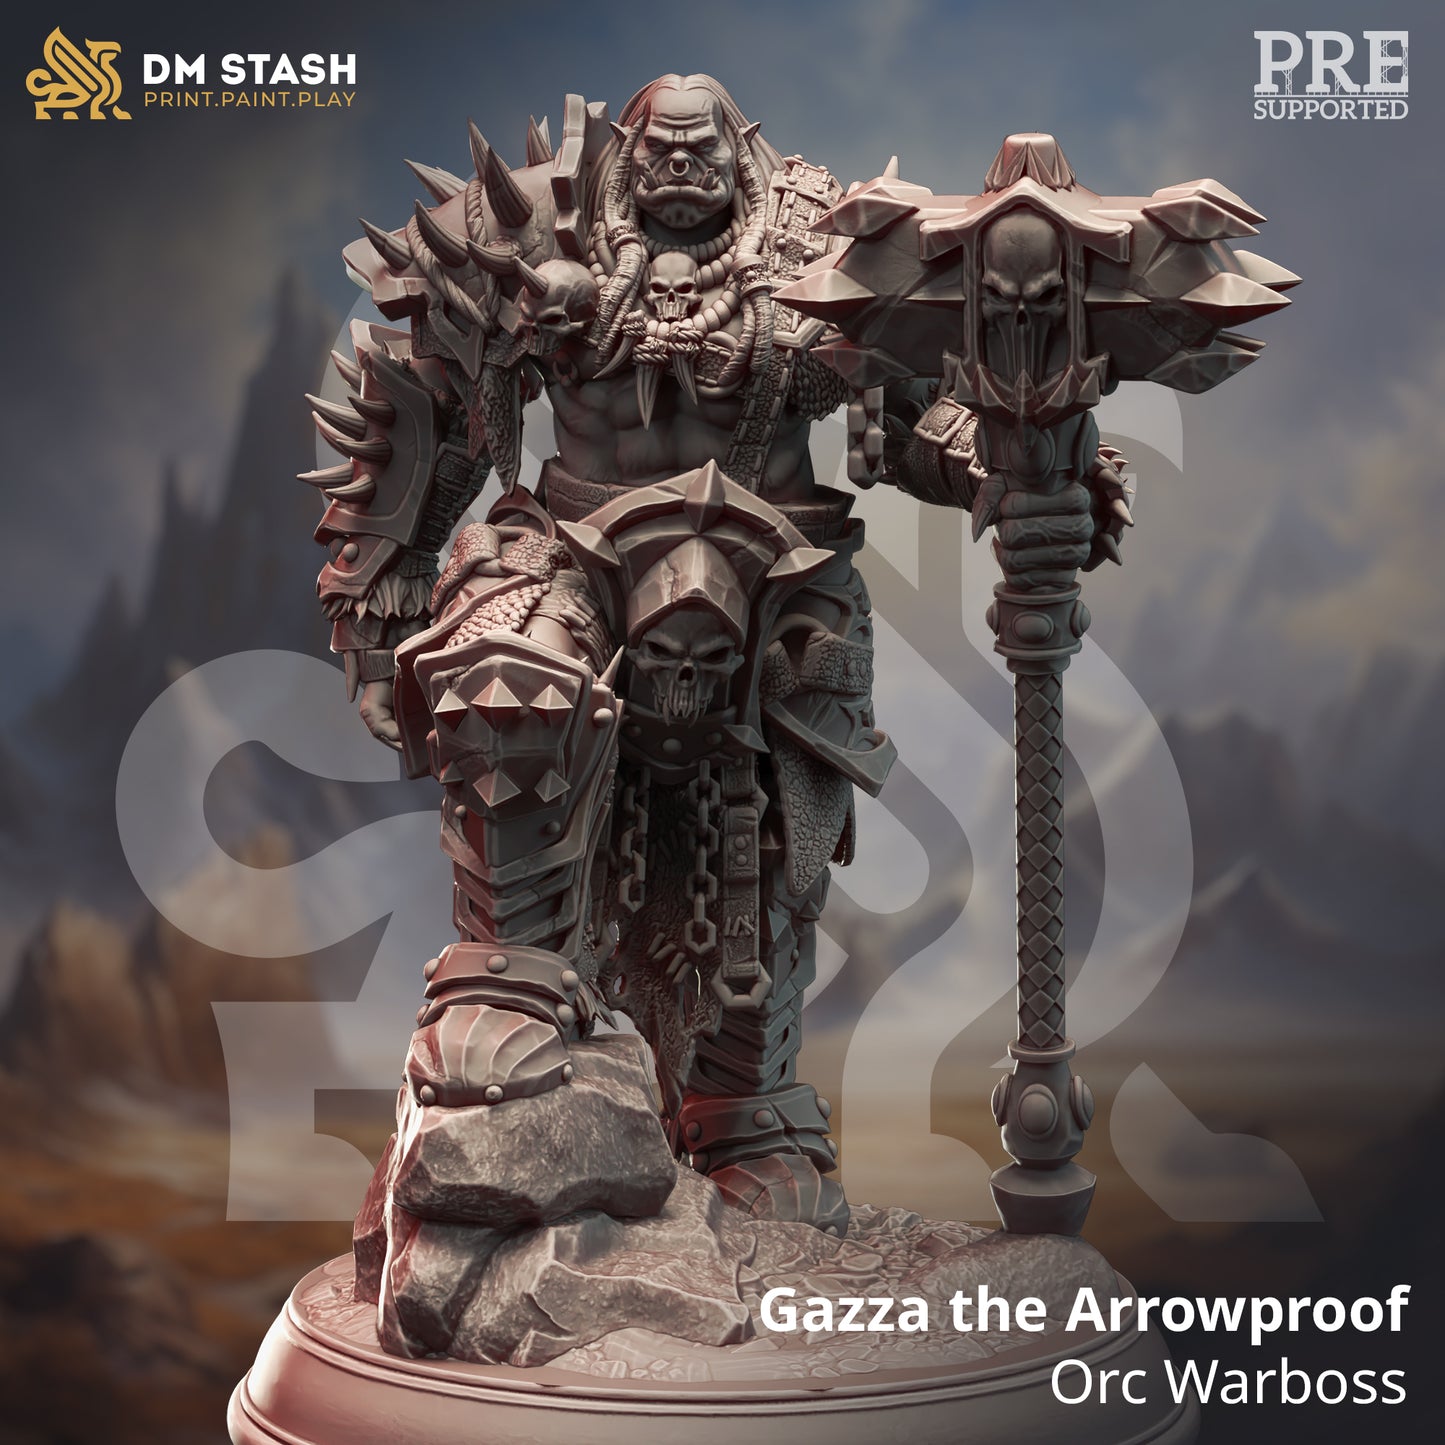 Gazza the Arrowproof - Orc Warboss